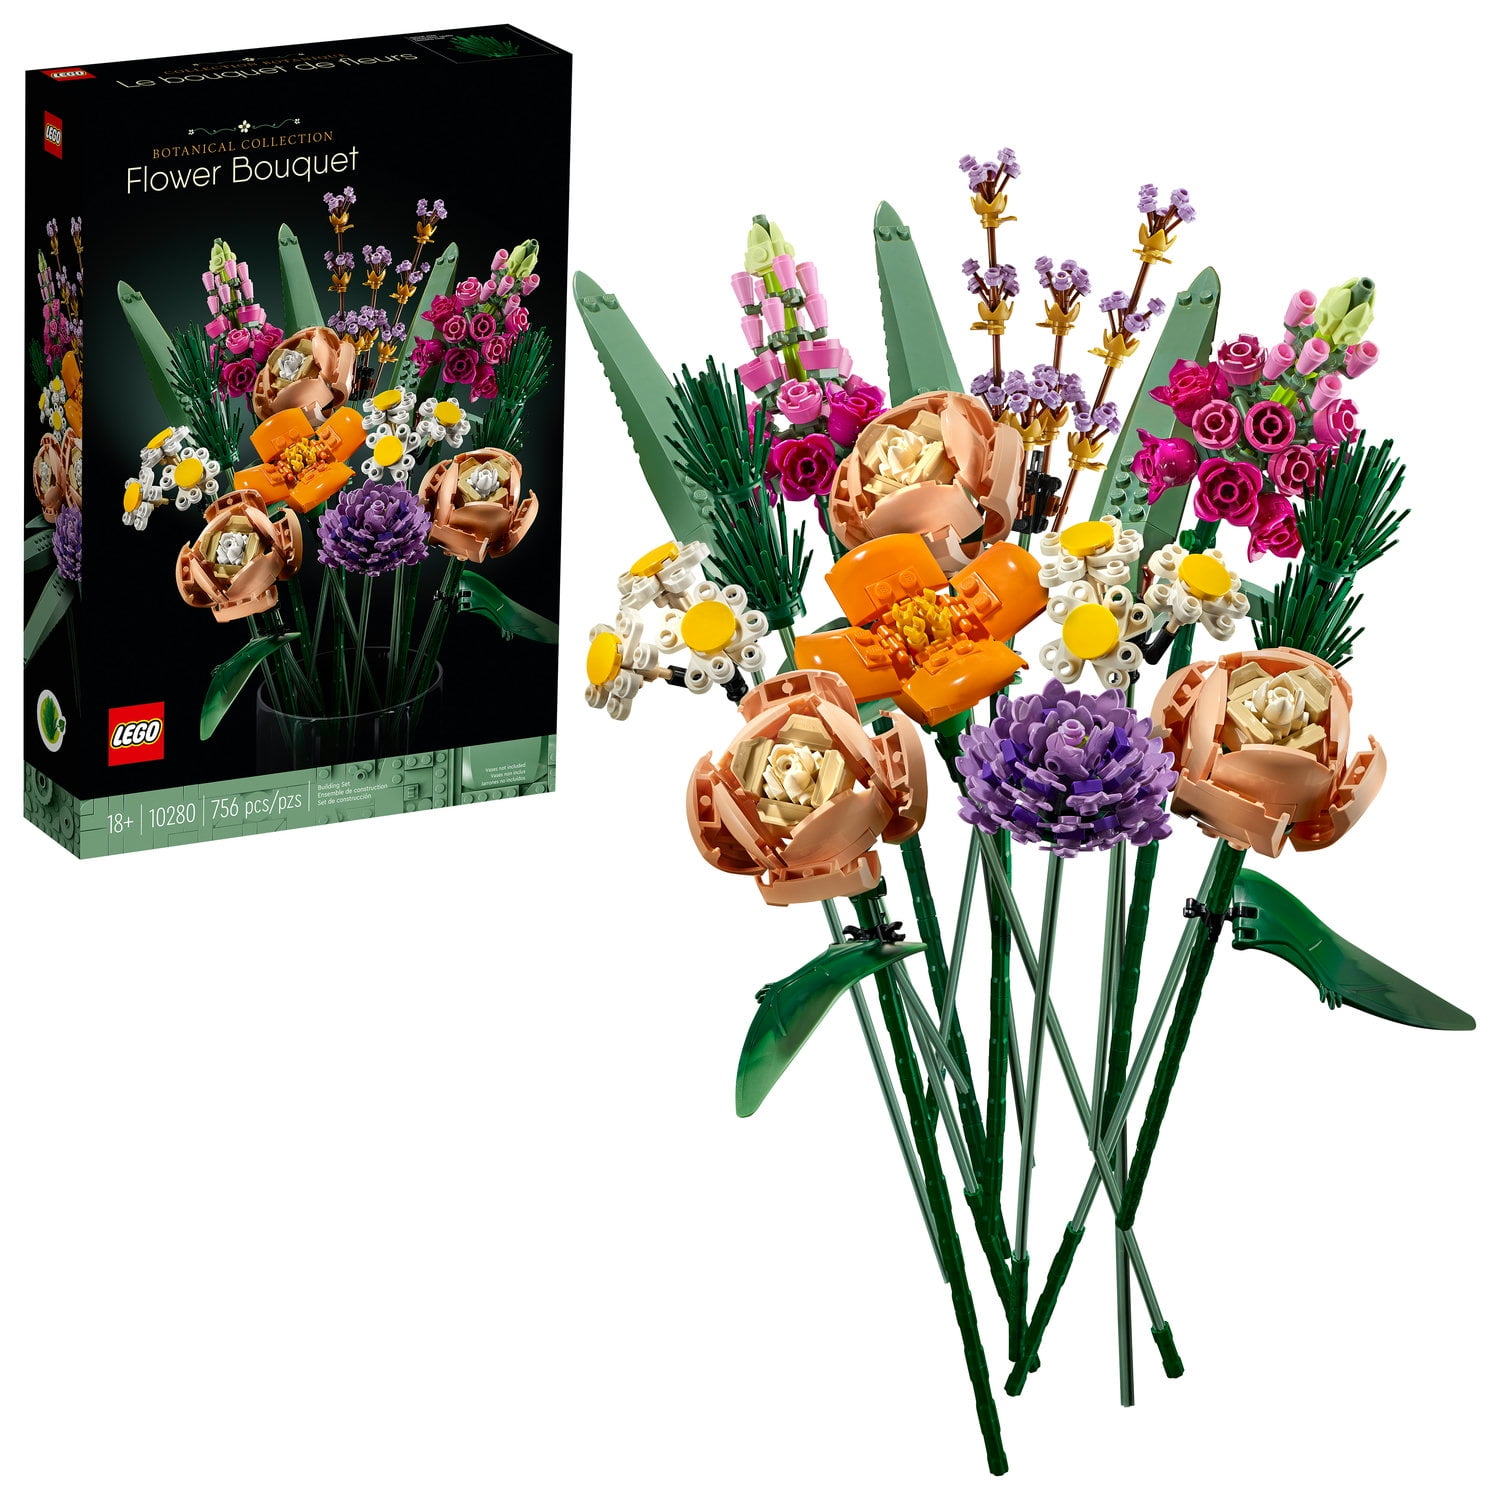 LEGO Flower Bouquet 10280 Botanical brand new in box